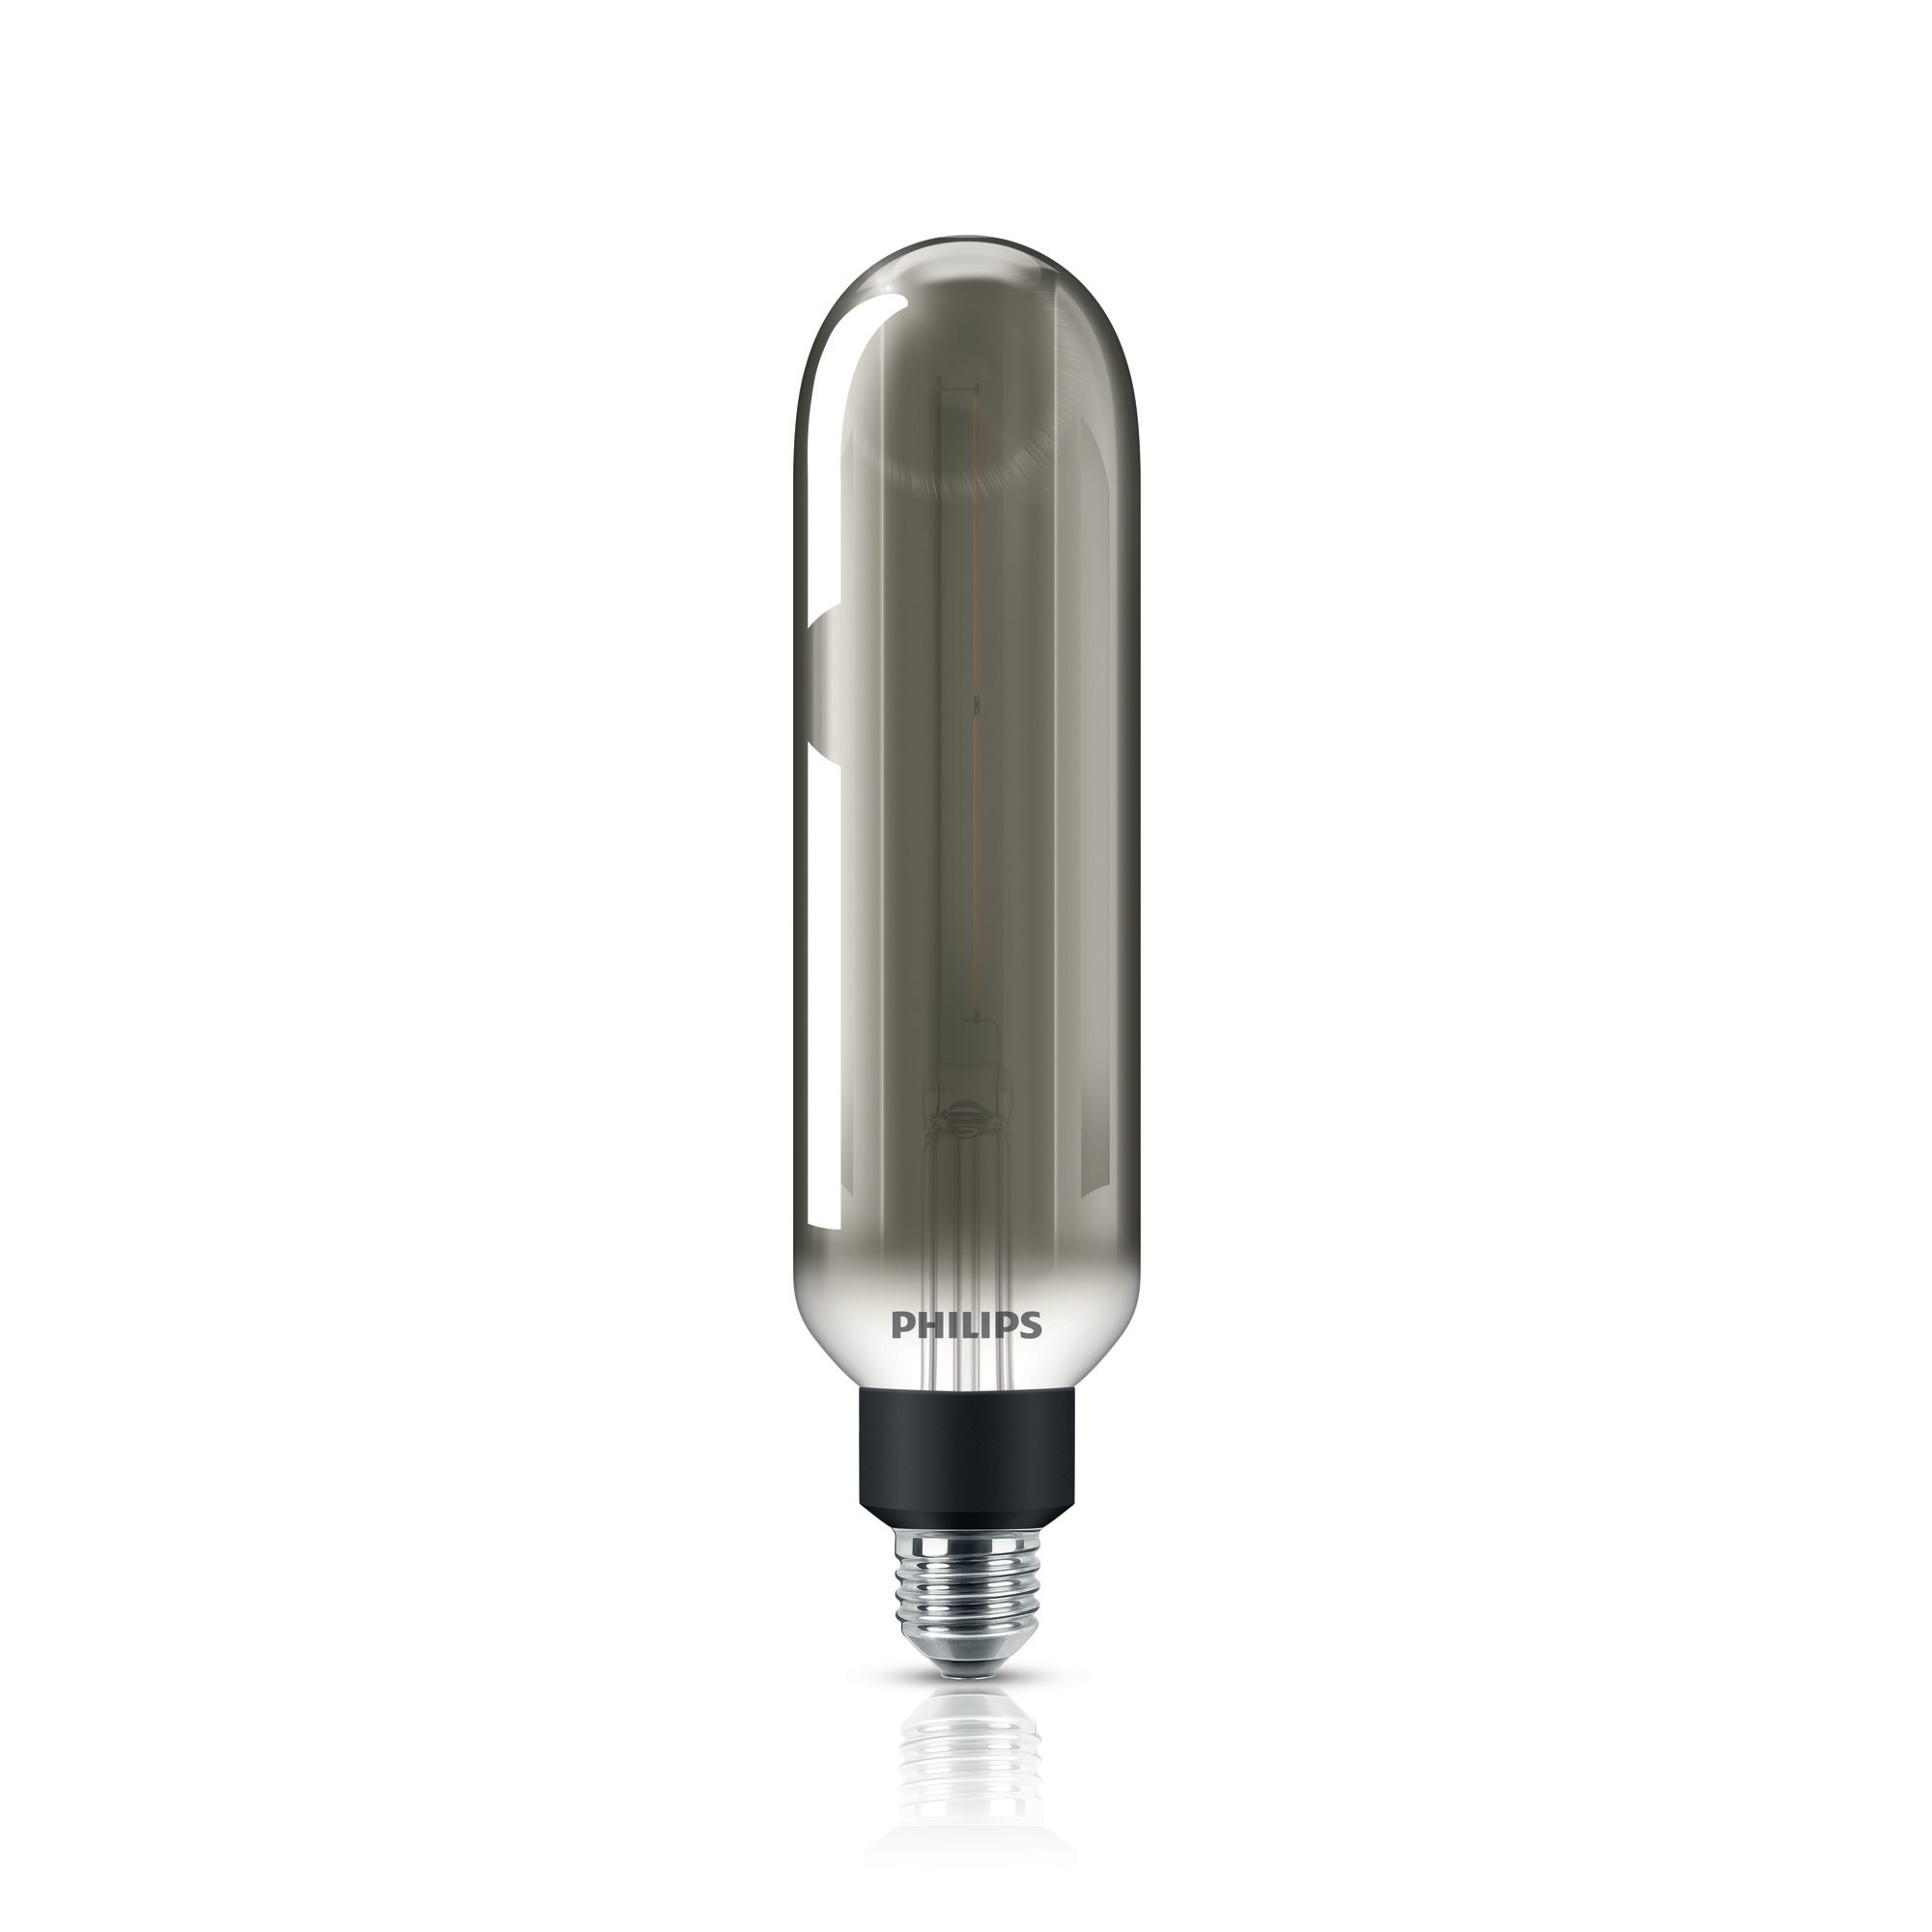 Philips LEDbulb Giant 6,5-25W E27 818 T65 smoky DIM 200lm